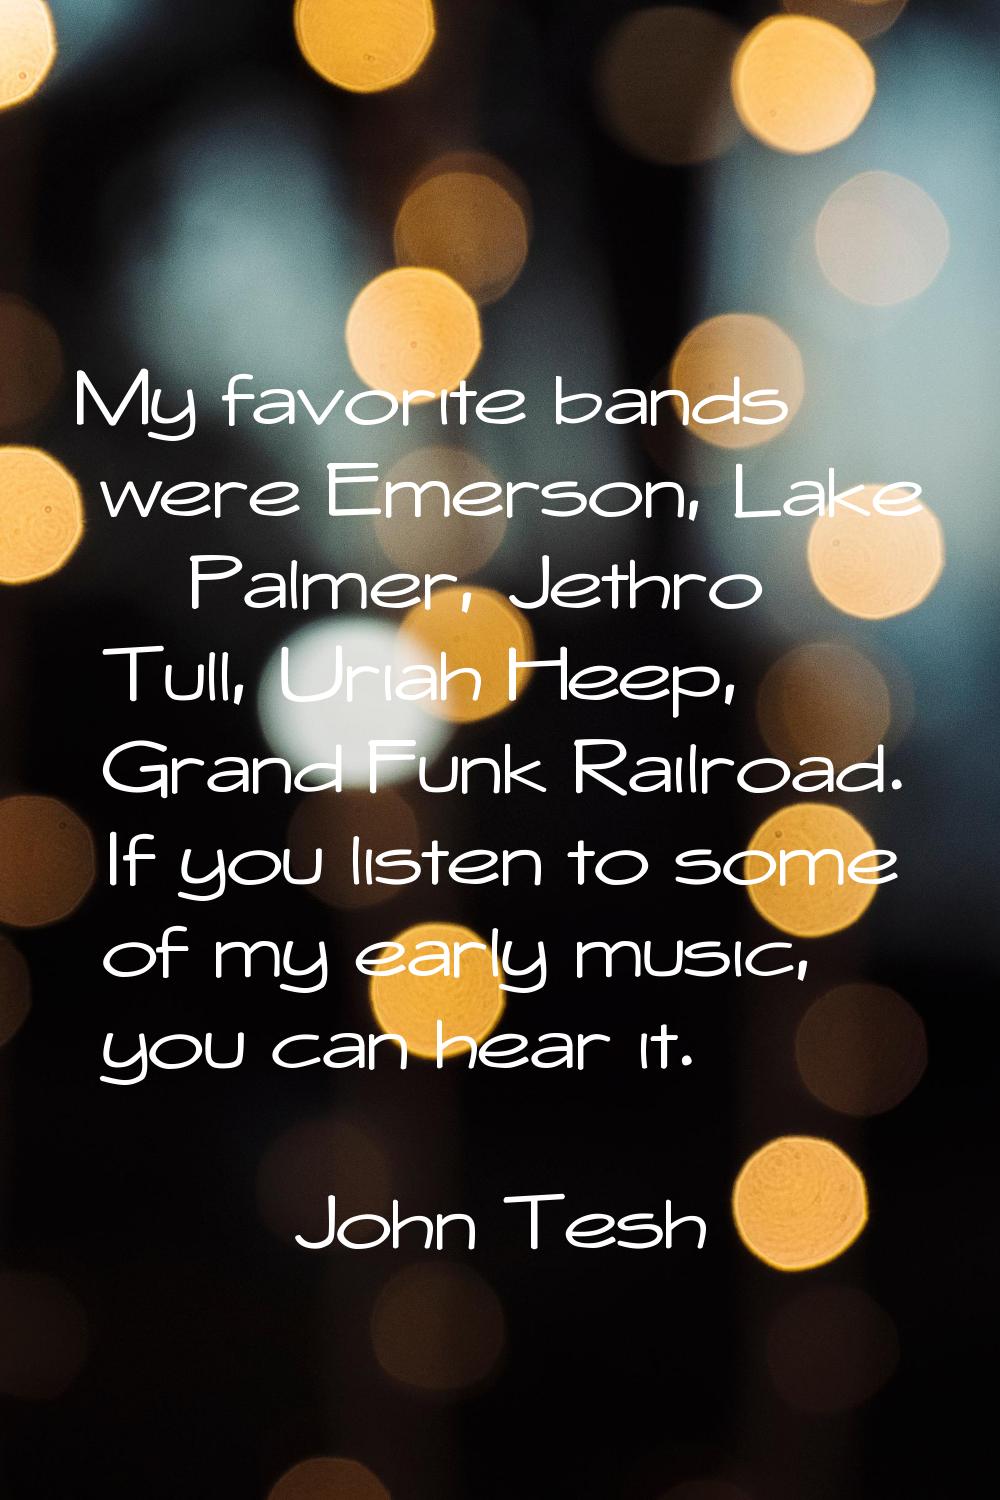 My favorite bands were Emerson, Lake & Palmer, Jethro Tull, Uriah Heep, Grand Funk Railroad. If you